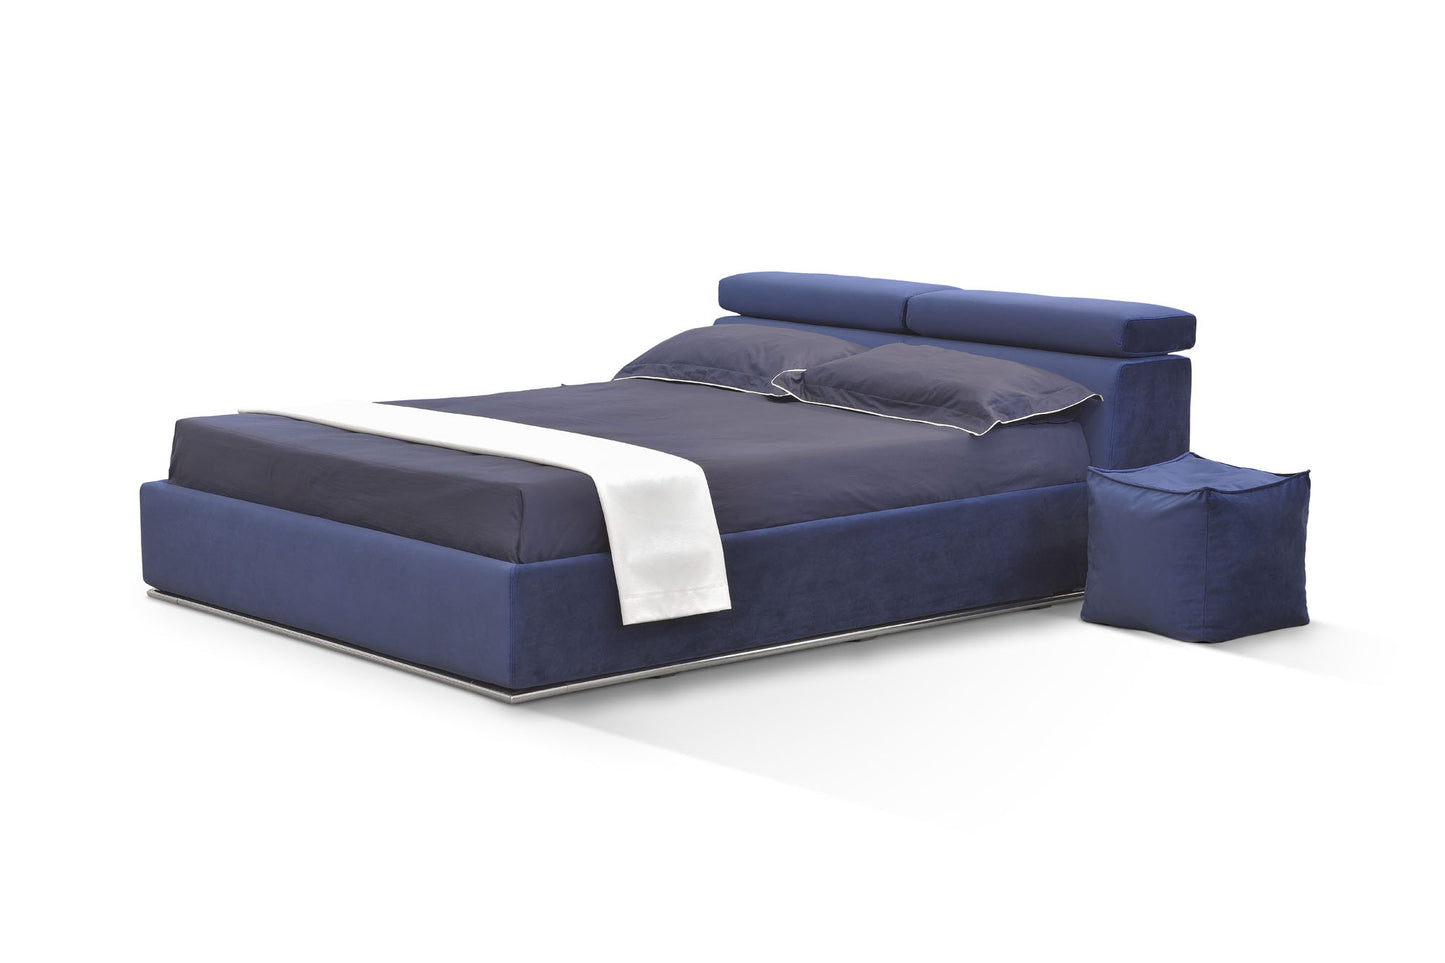 Novaluna - Alba Bed - Made in Italy